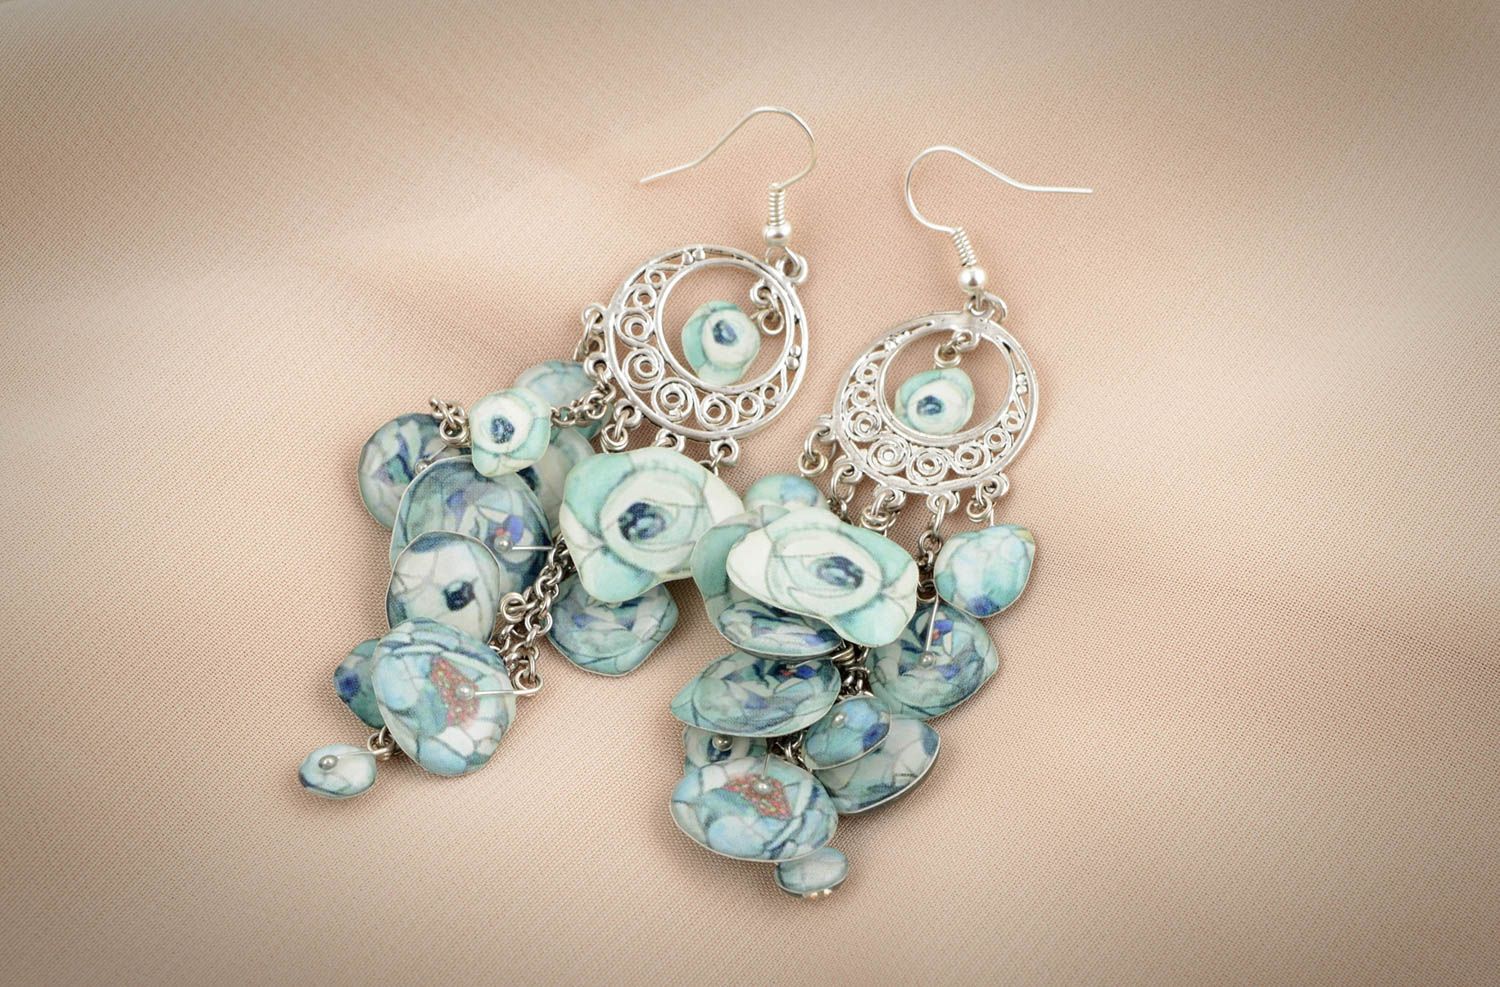 Fashion earrings designer jewelry handcrafted jewelry earrings for women photo 5